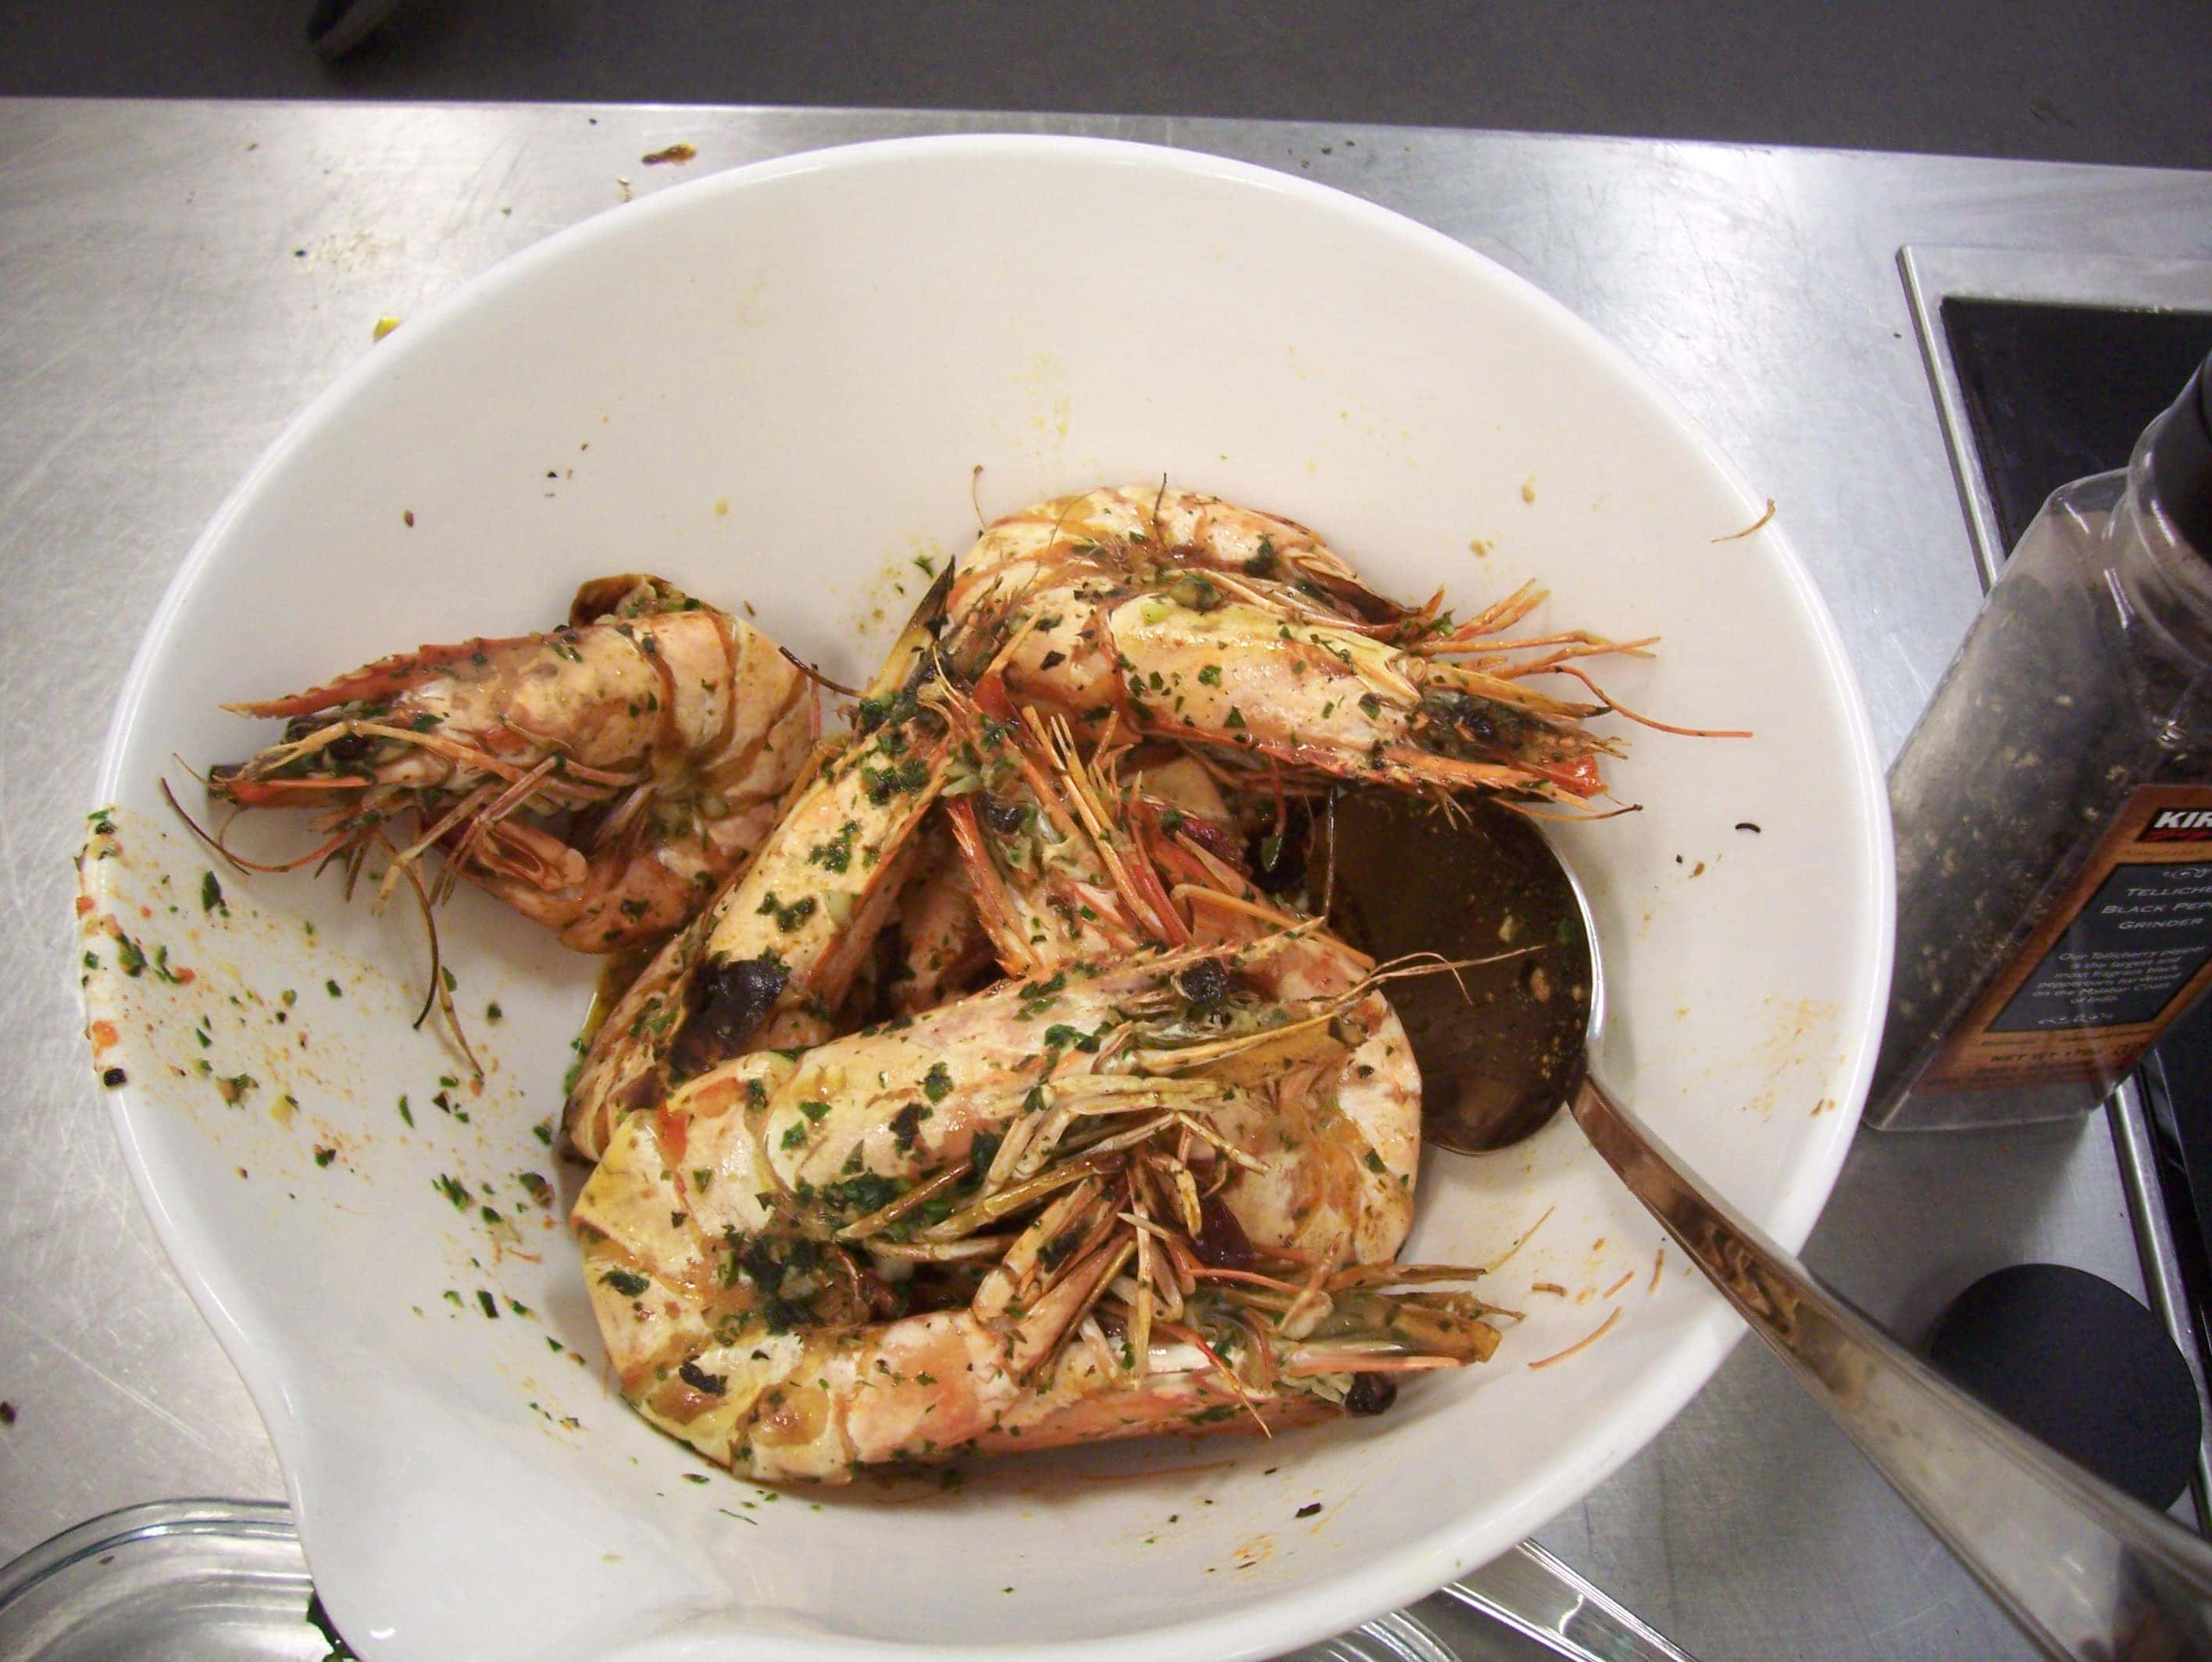 shrimps in a bowl